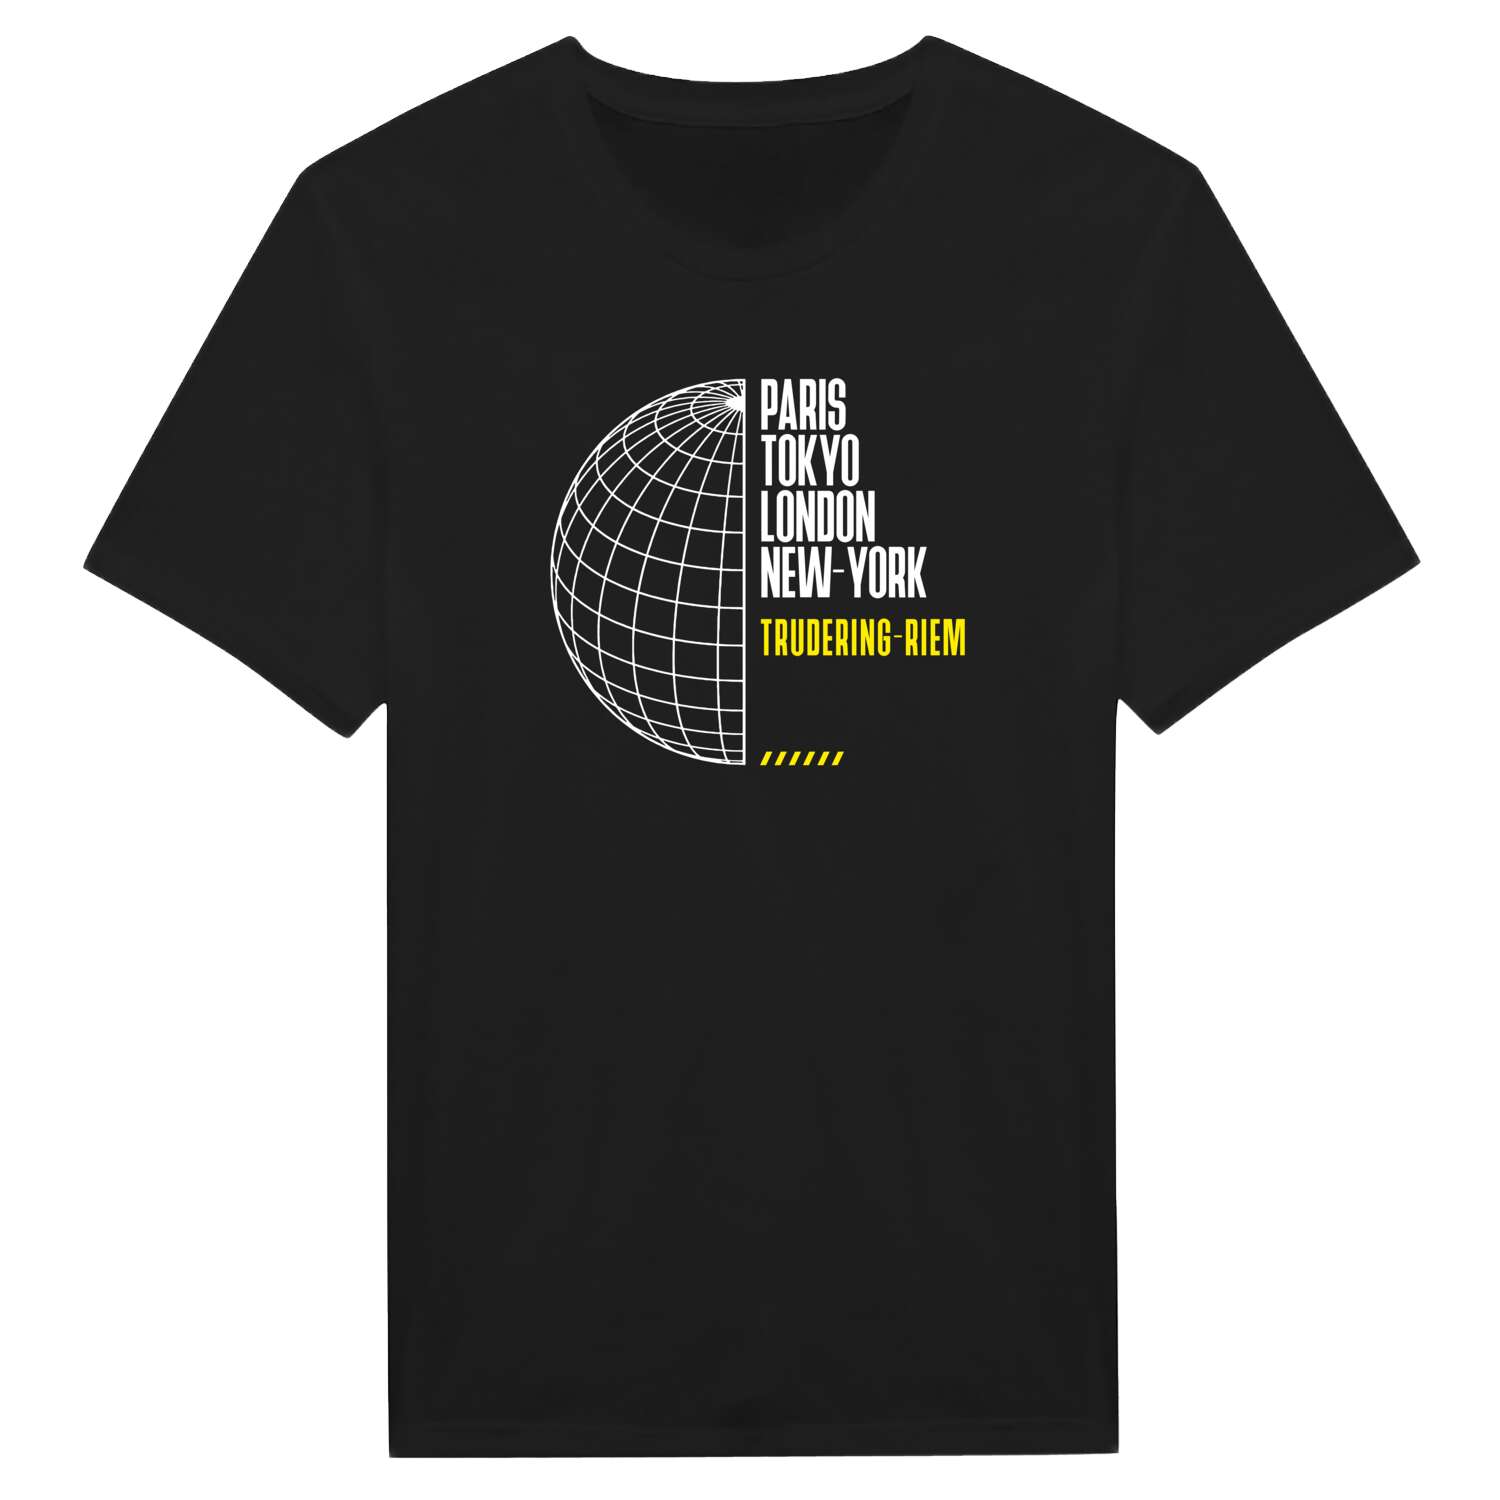 Trudering-Riem T-Shirt »Paris Tokyo London«